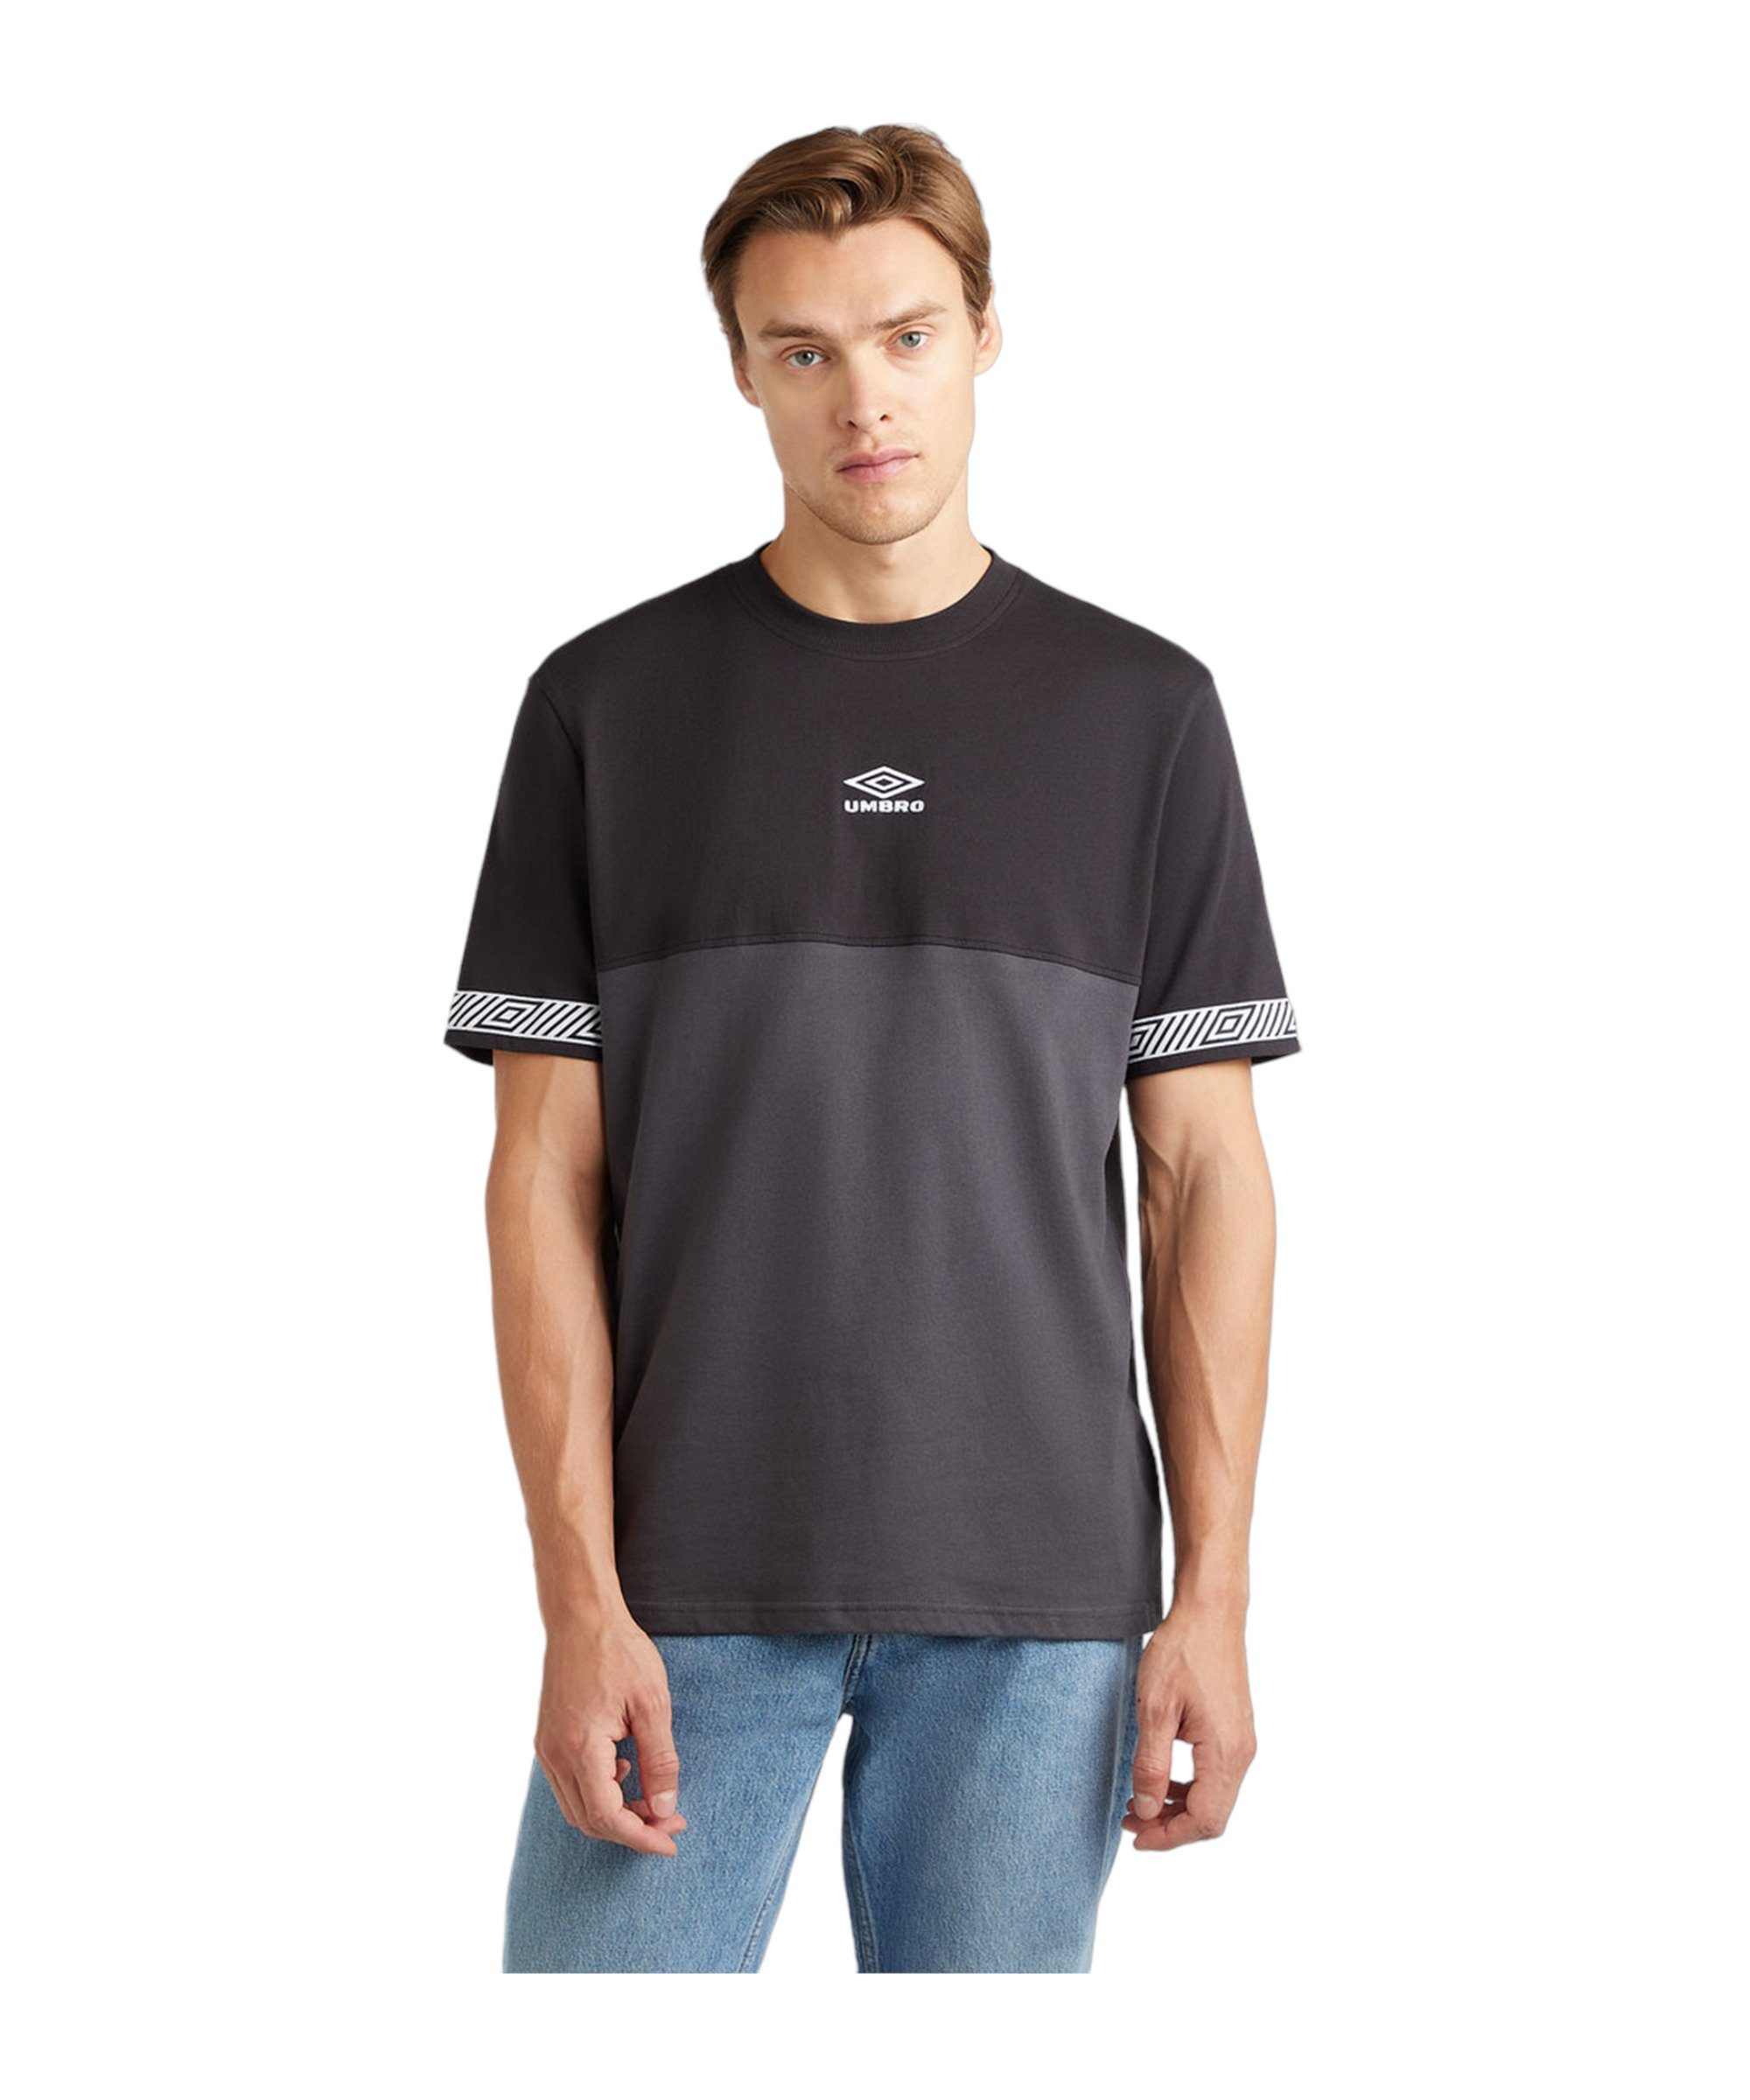 Club default grauschwarz Style Crew Sports T-Shirt Umbro T-Shirt